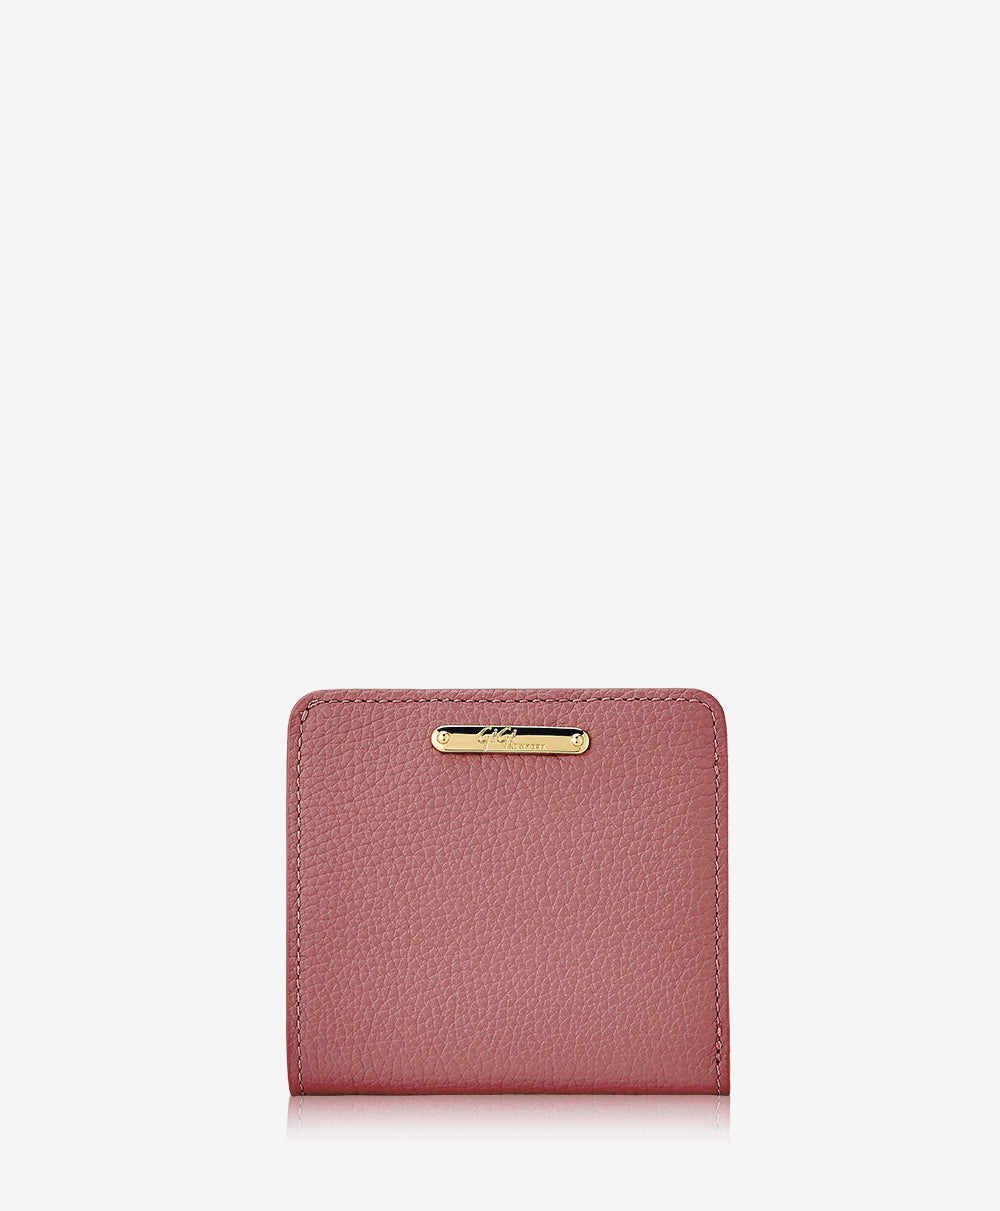 GiGi New York Mini Foldover Wallet Rose Pebble Grain Leather